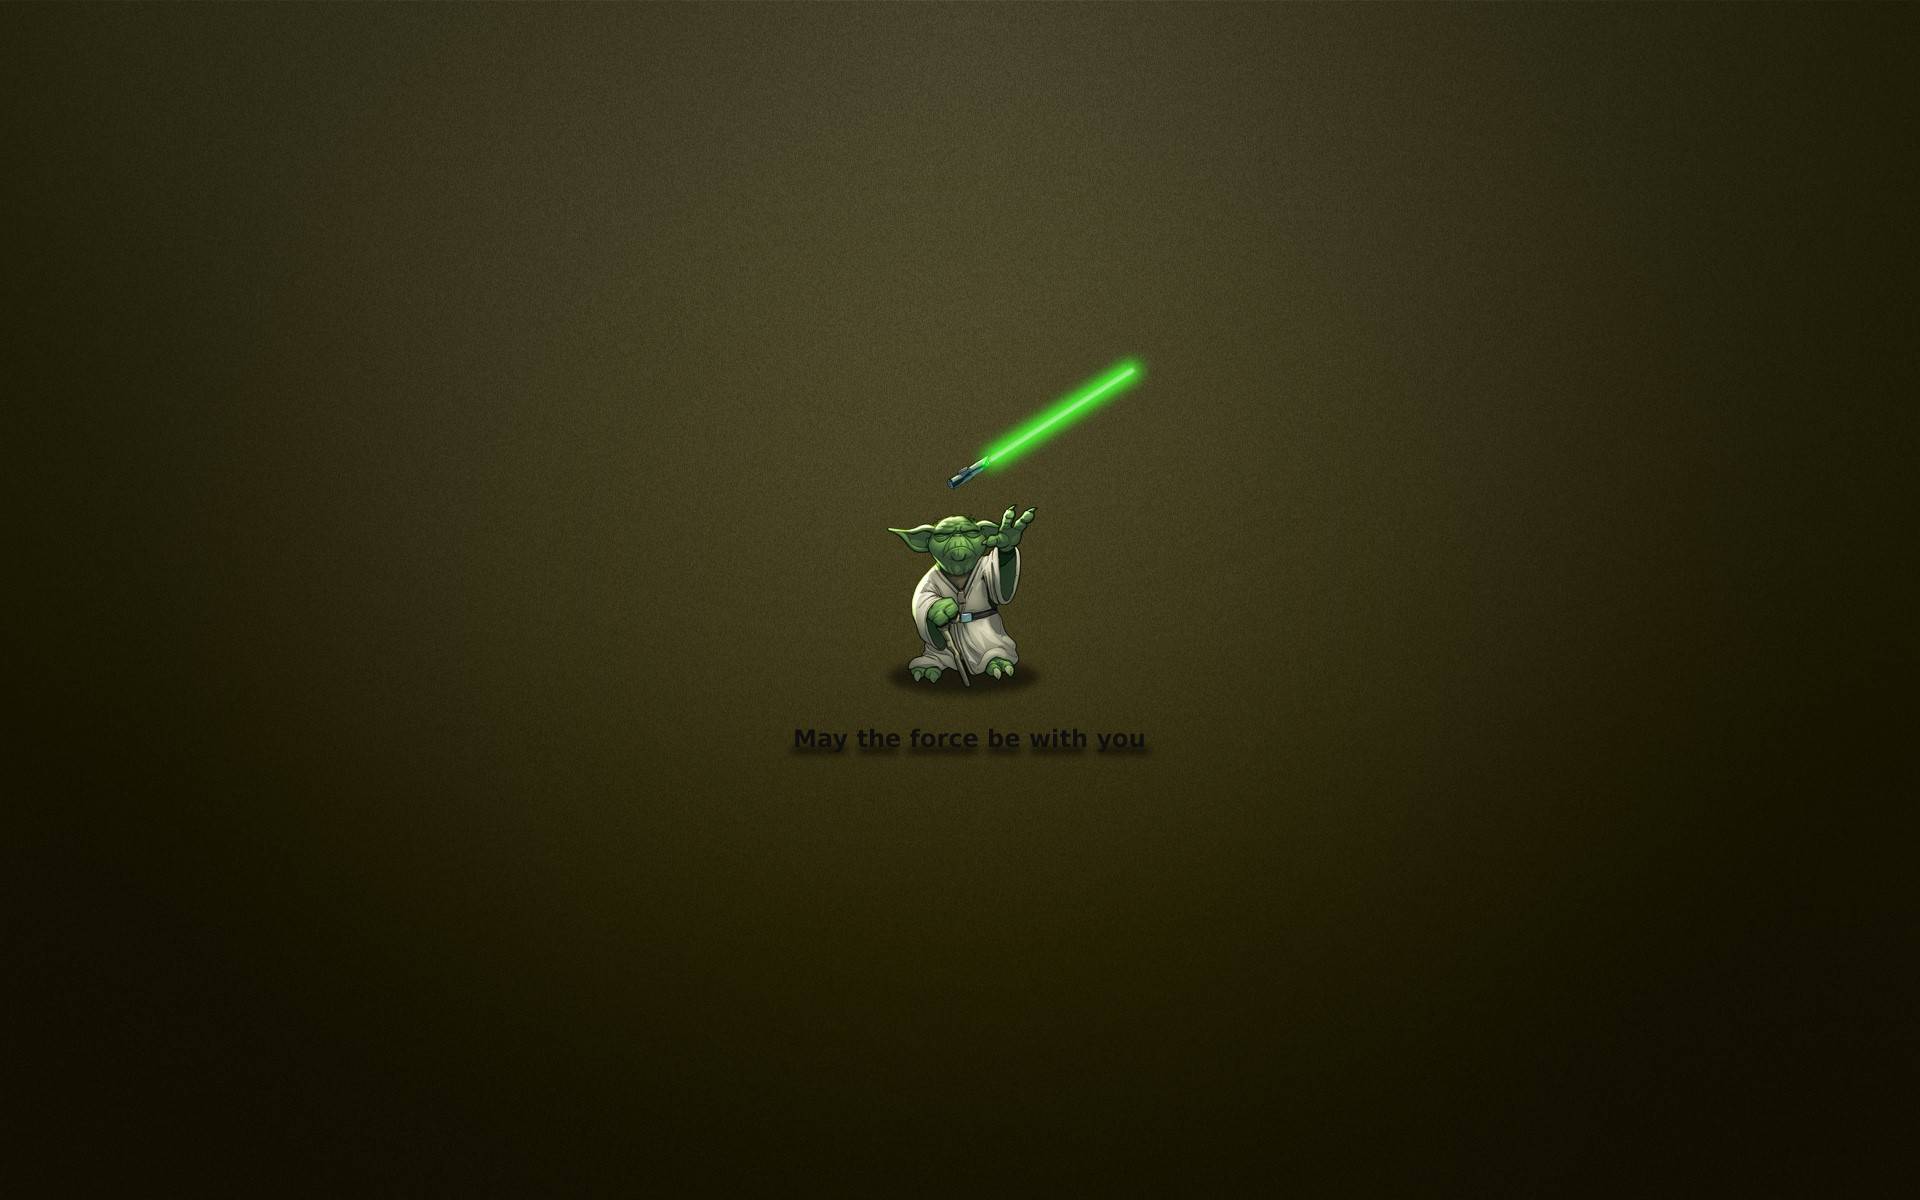 Yoda Star Wars Phone Wallpapers Top Free Yoda Star Wars